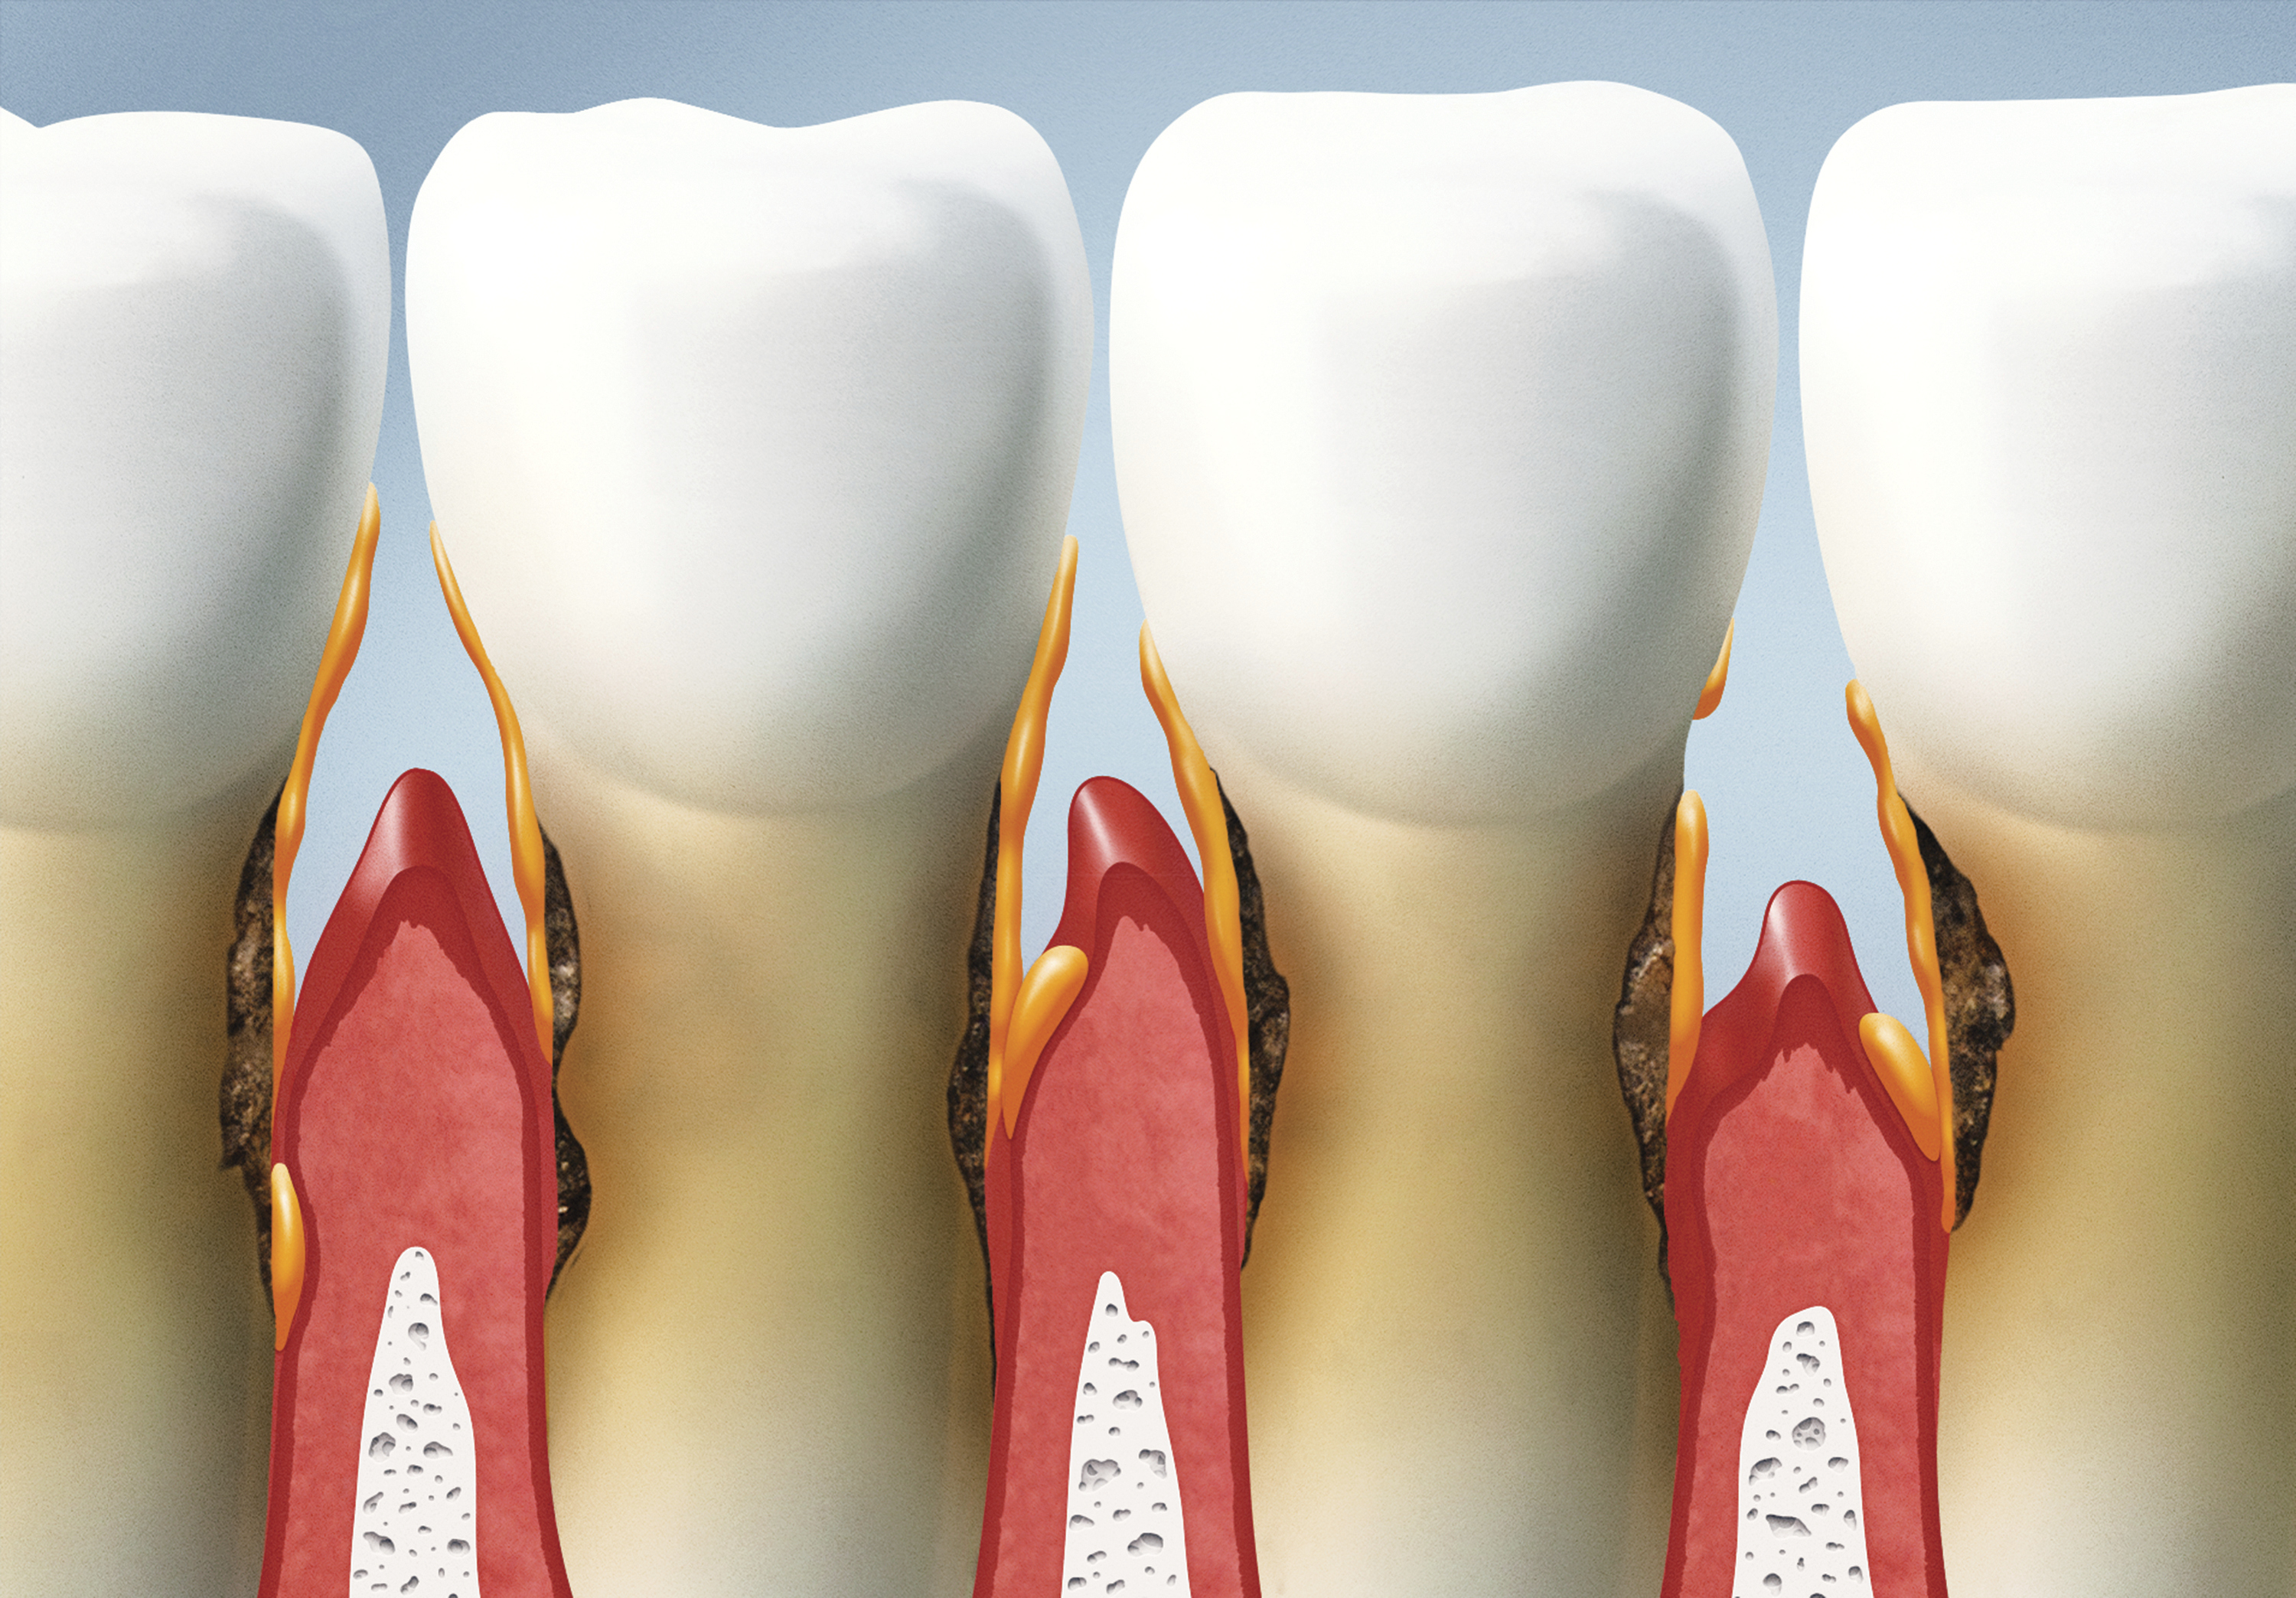 periodontologija